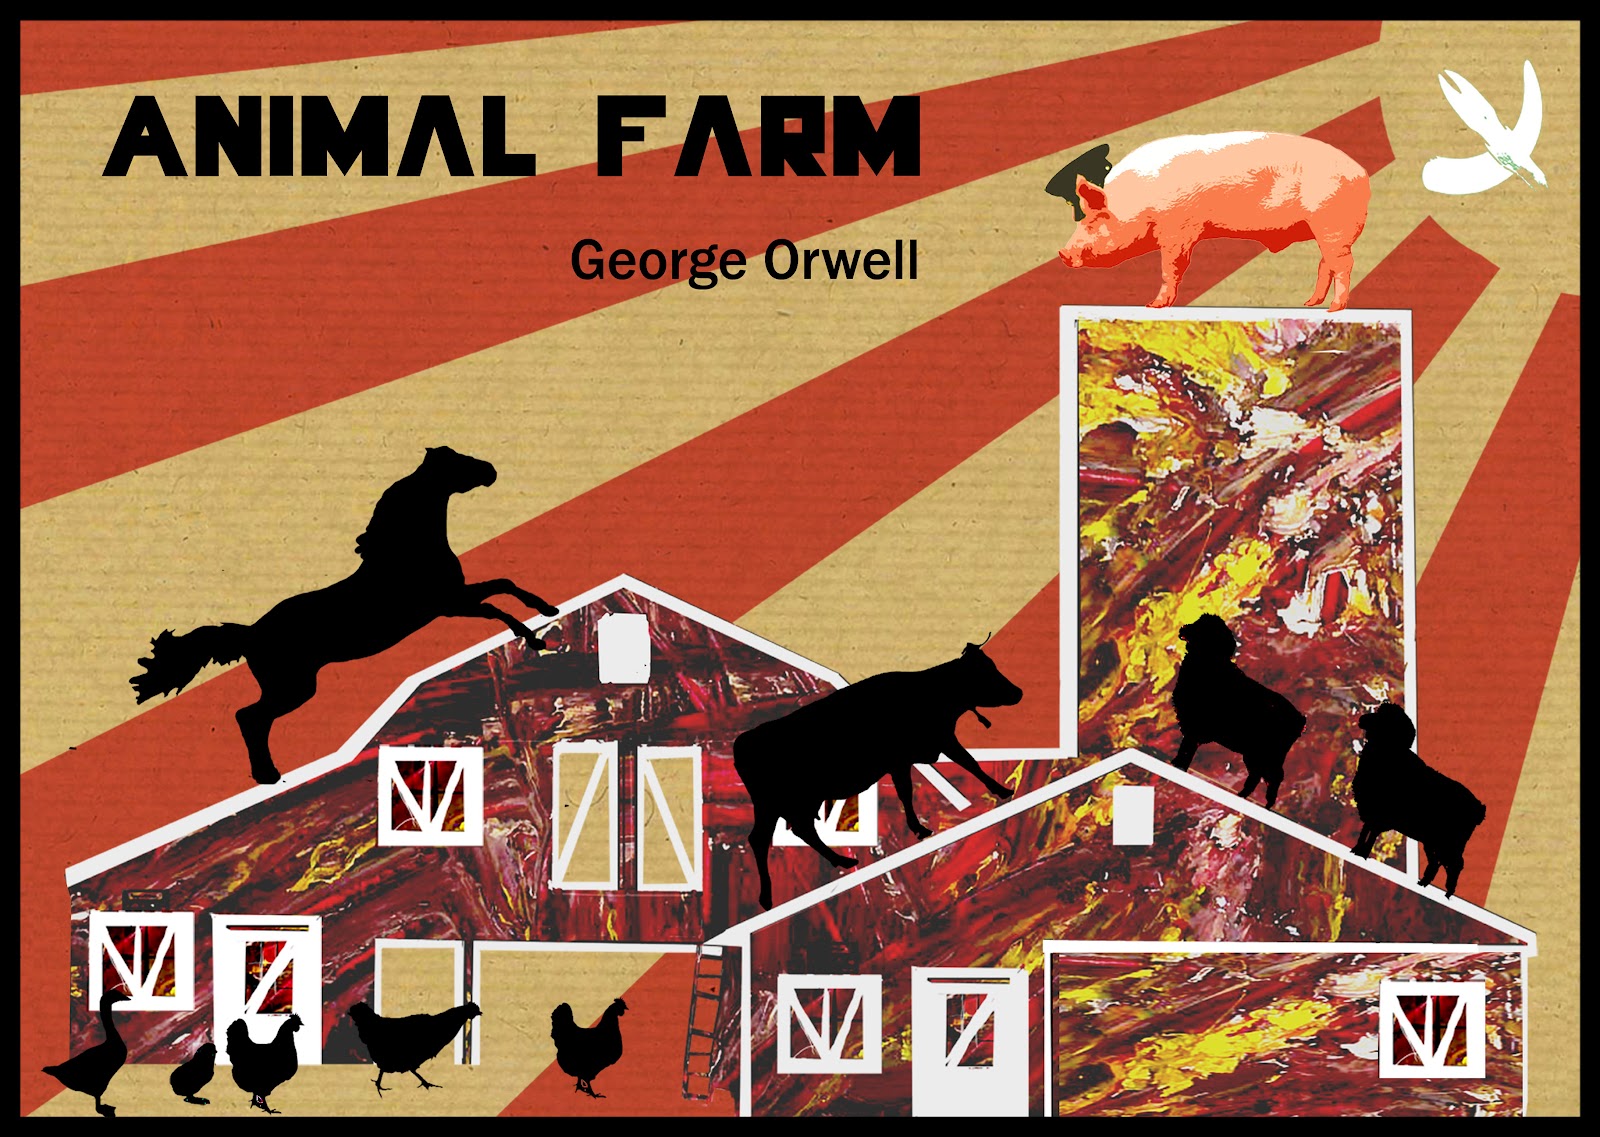 animal farm propaganda essay